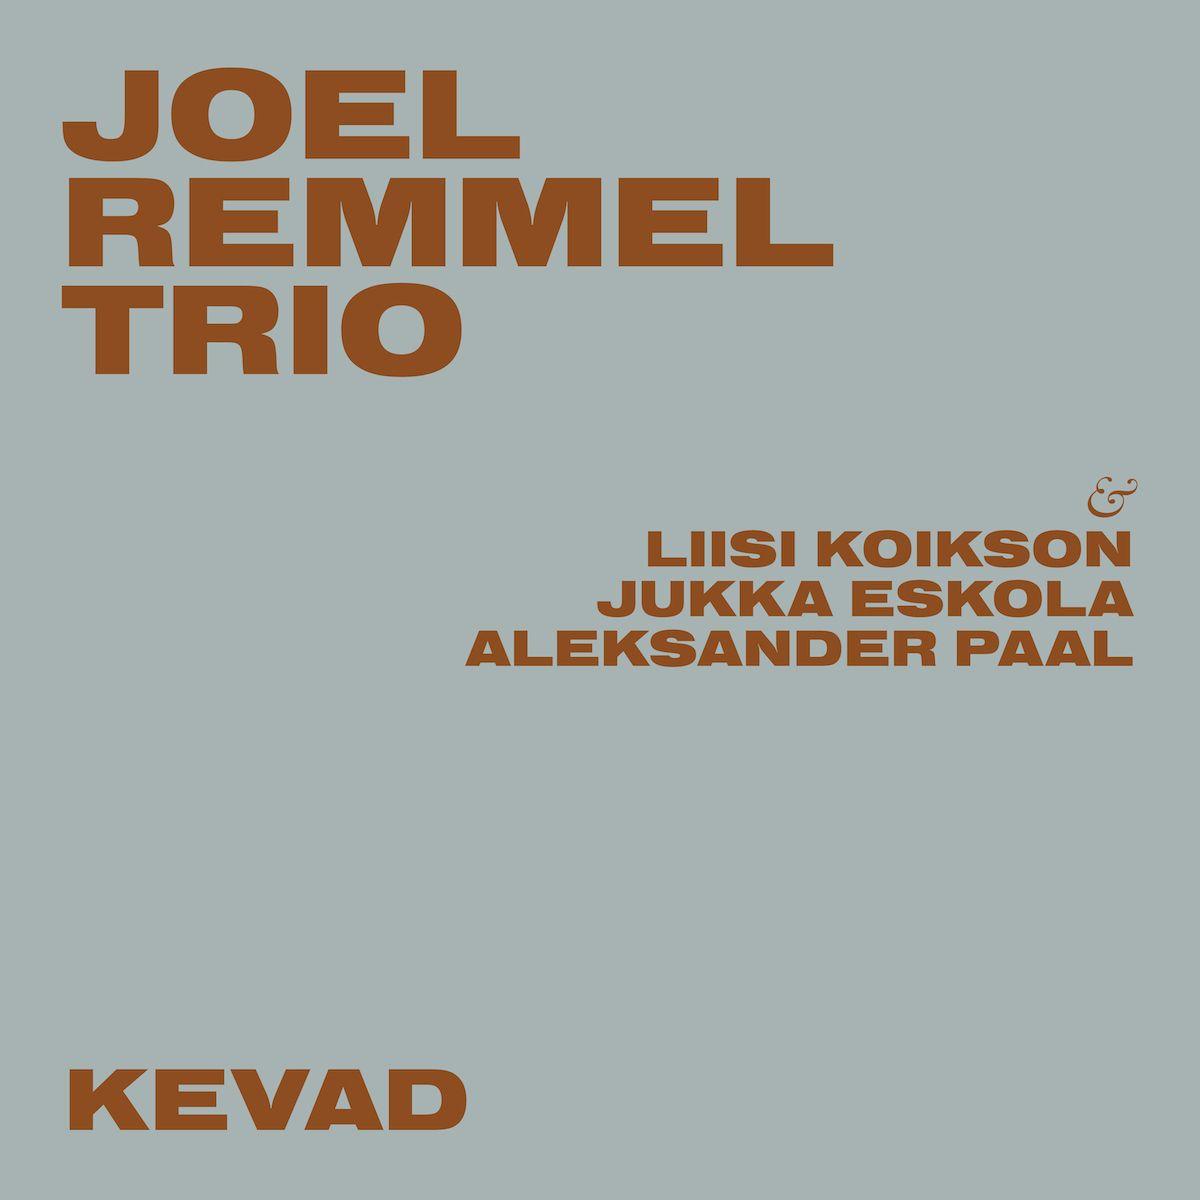 Joel Remmel Trio - Kevad (2021) CD